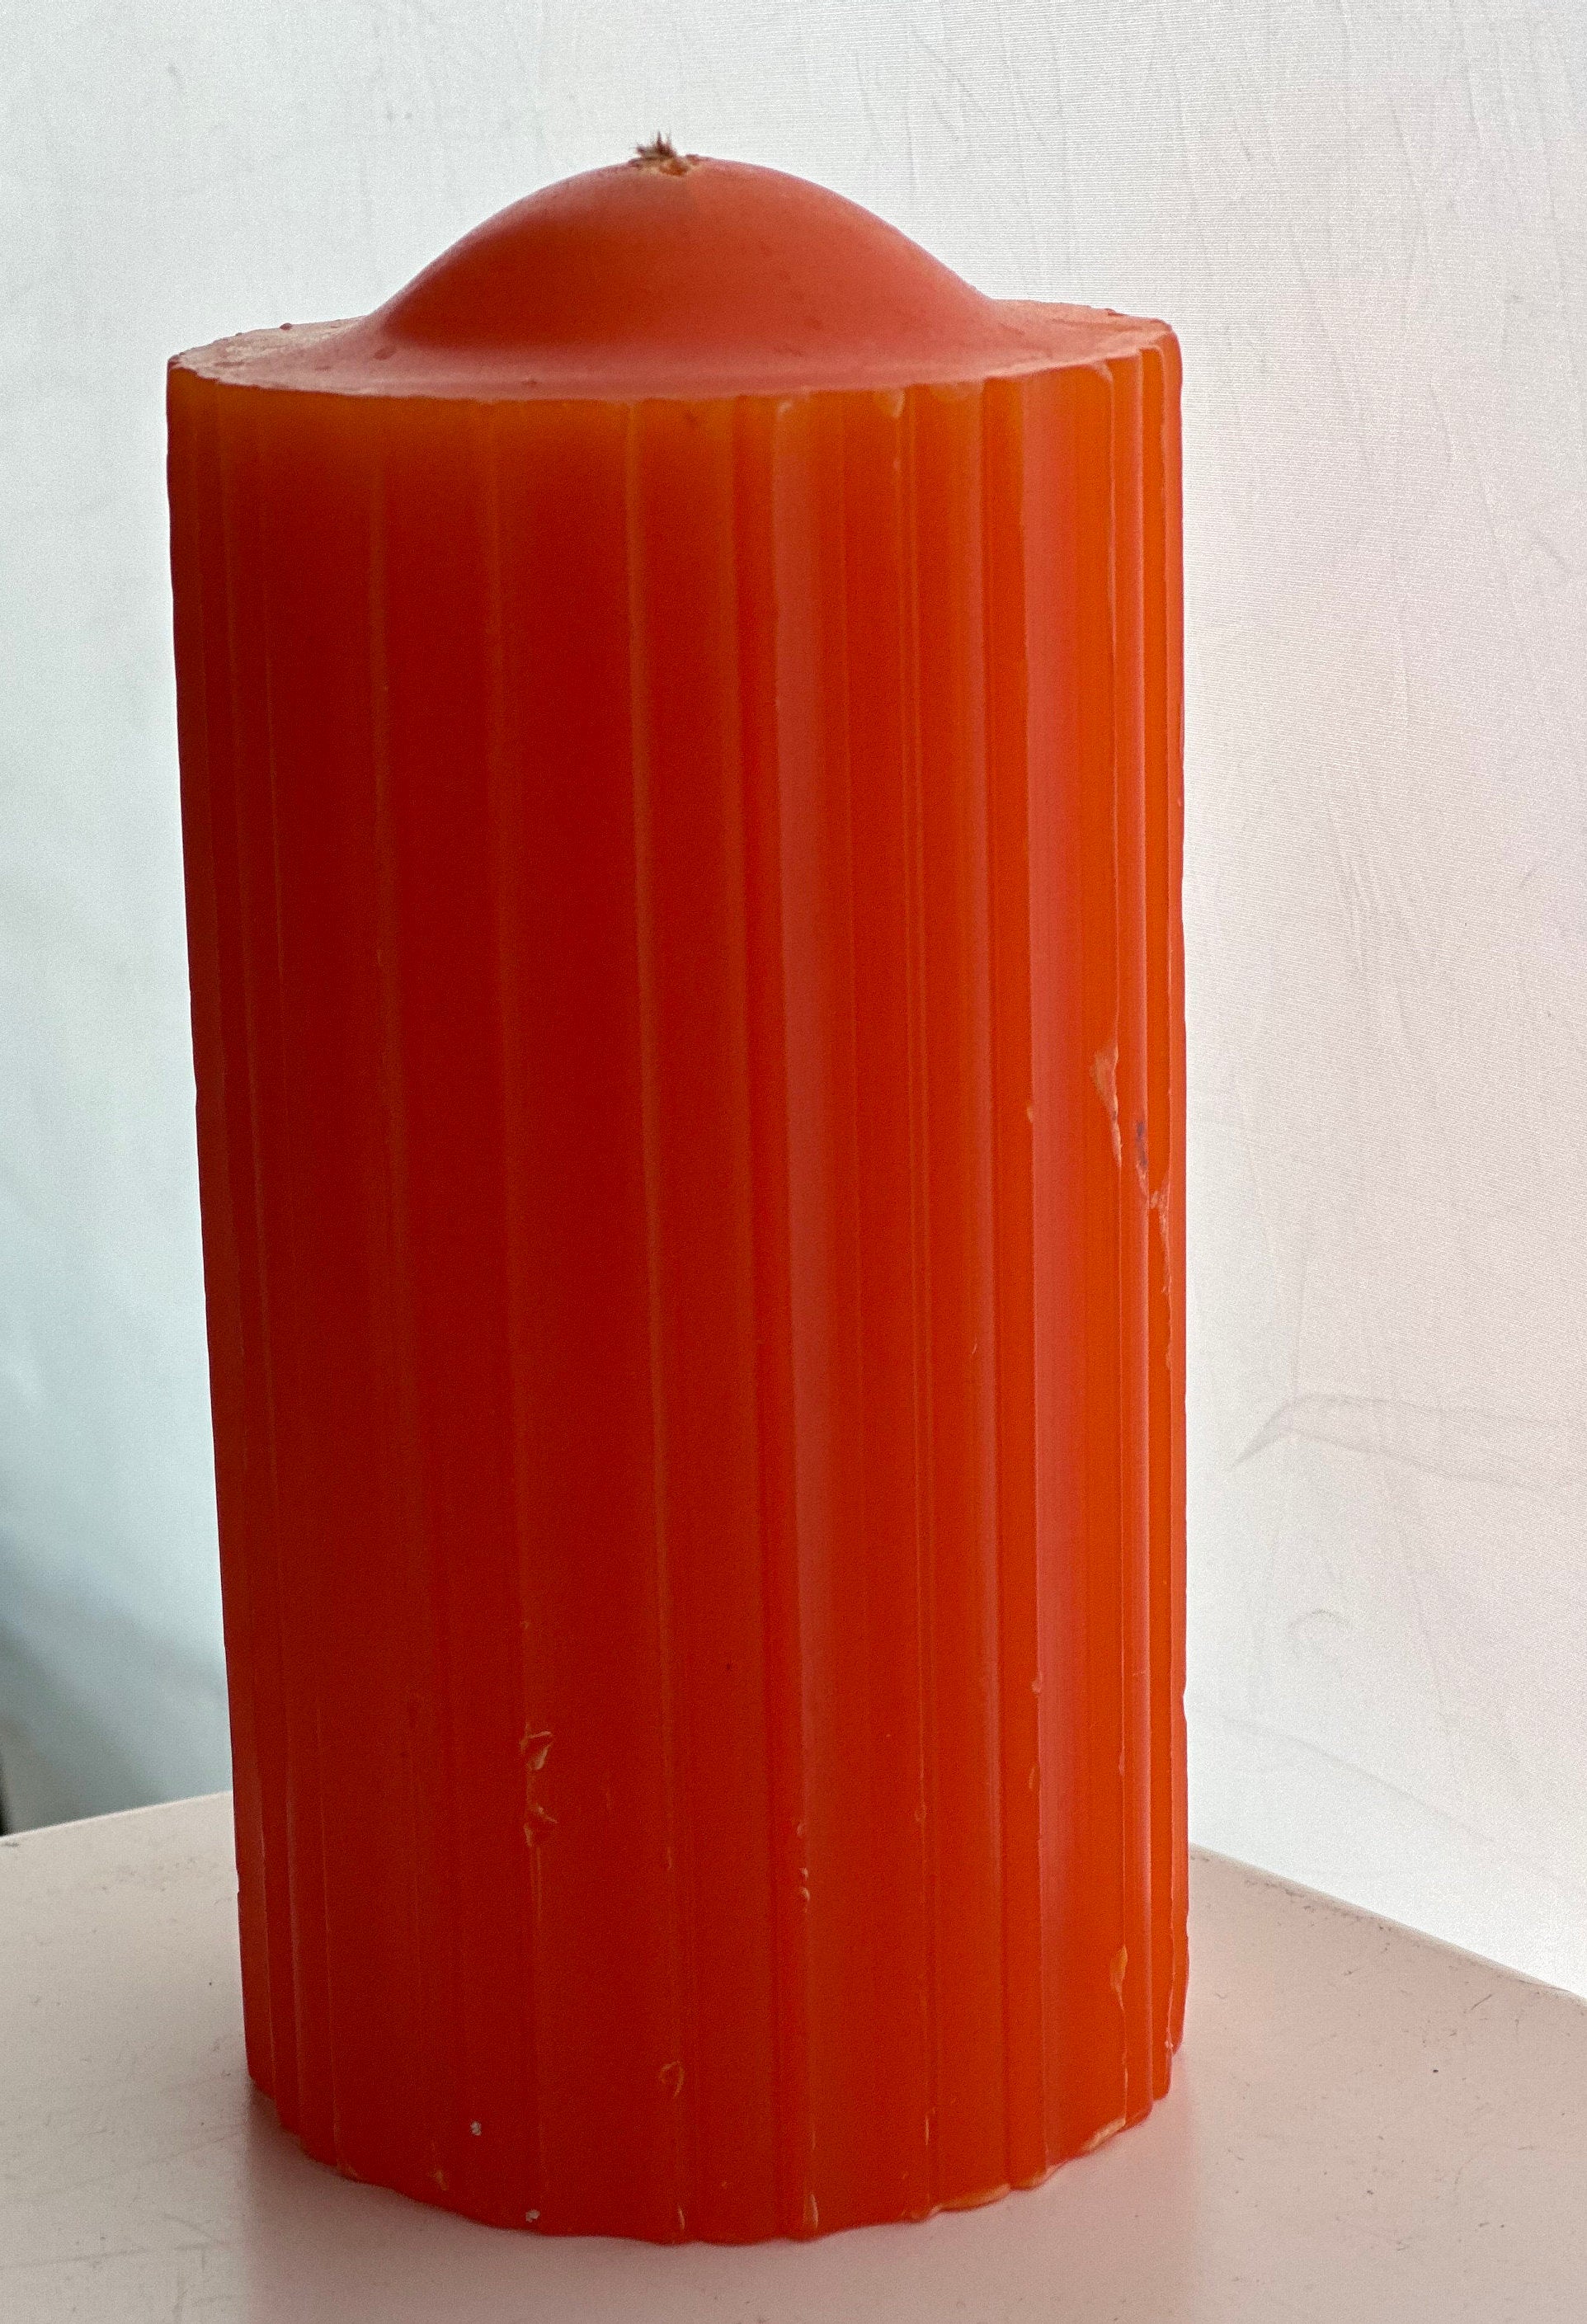 Orange wax pillar candle with ridged surface